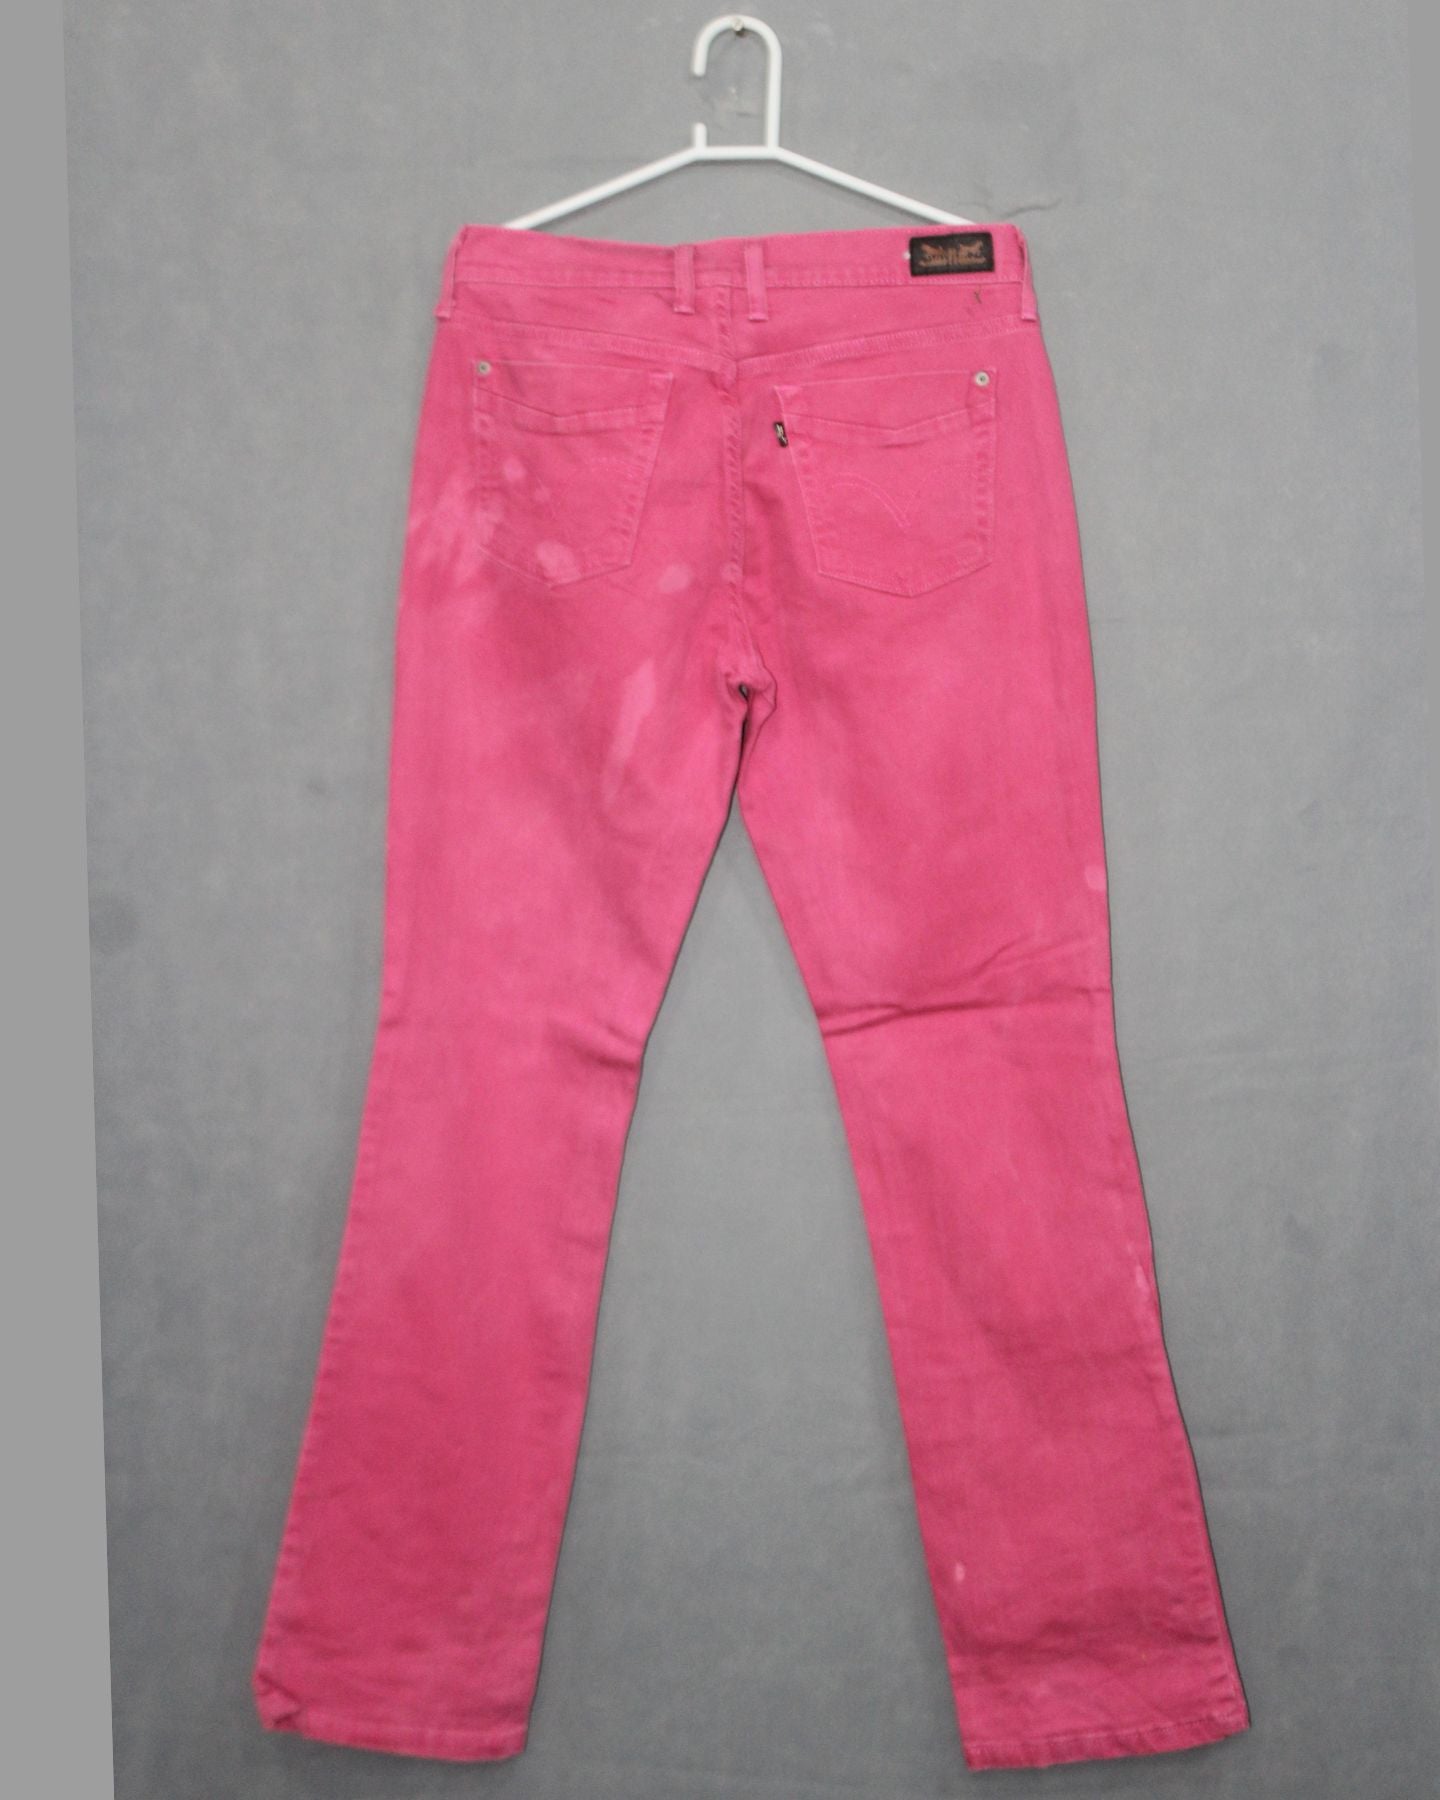 Levi's 505 Branded Original Denim Flare Jeans For Women Pant